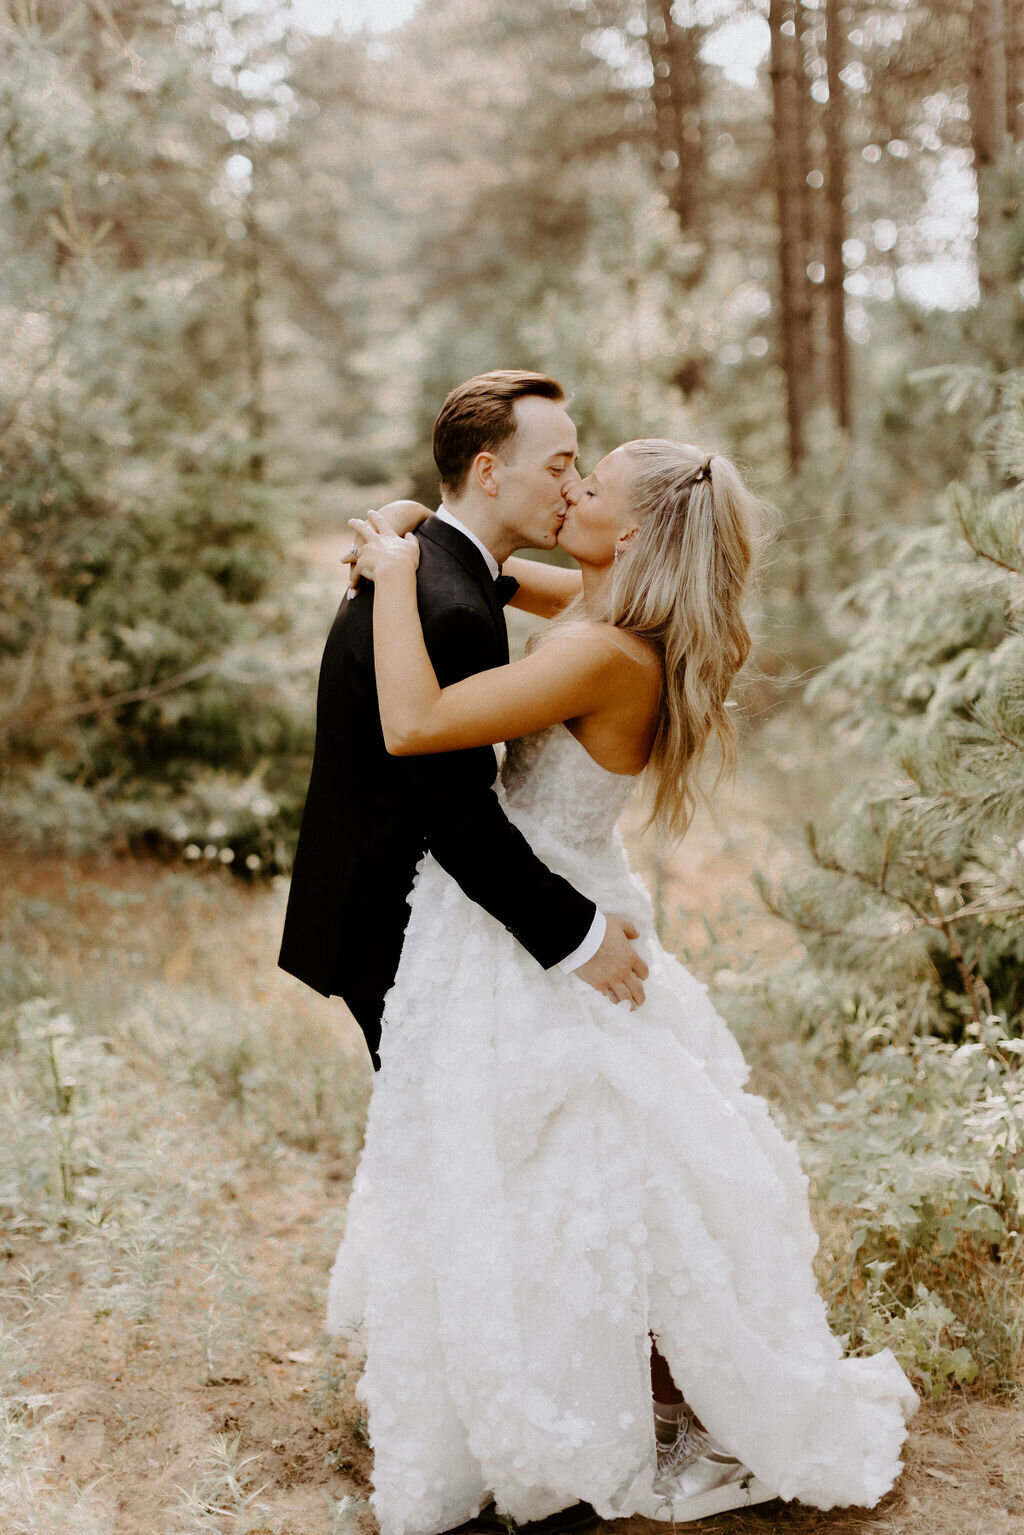 whimical-woodland-wedding-portrait-bride-groom